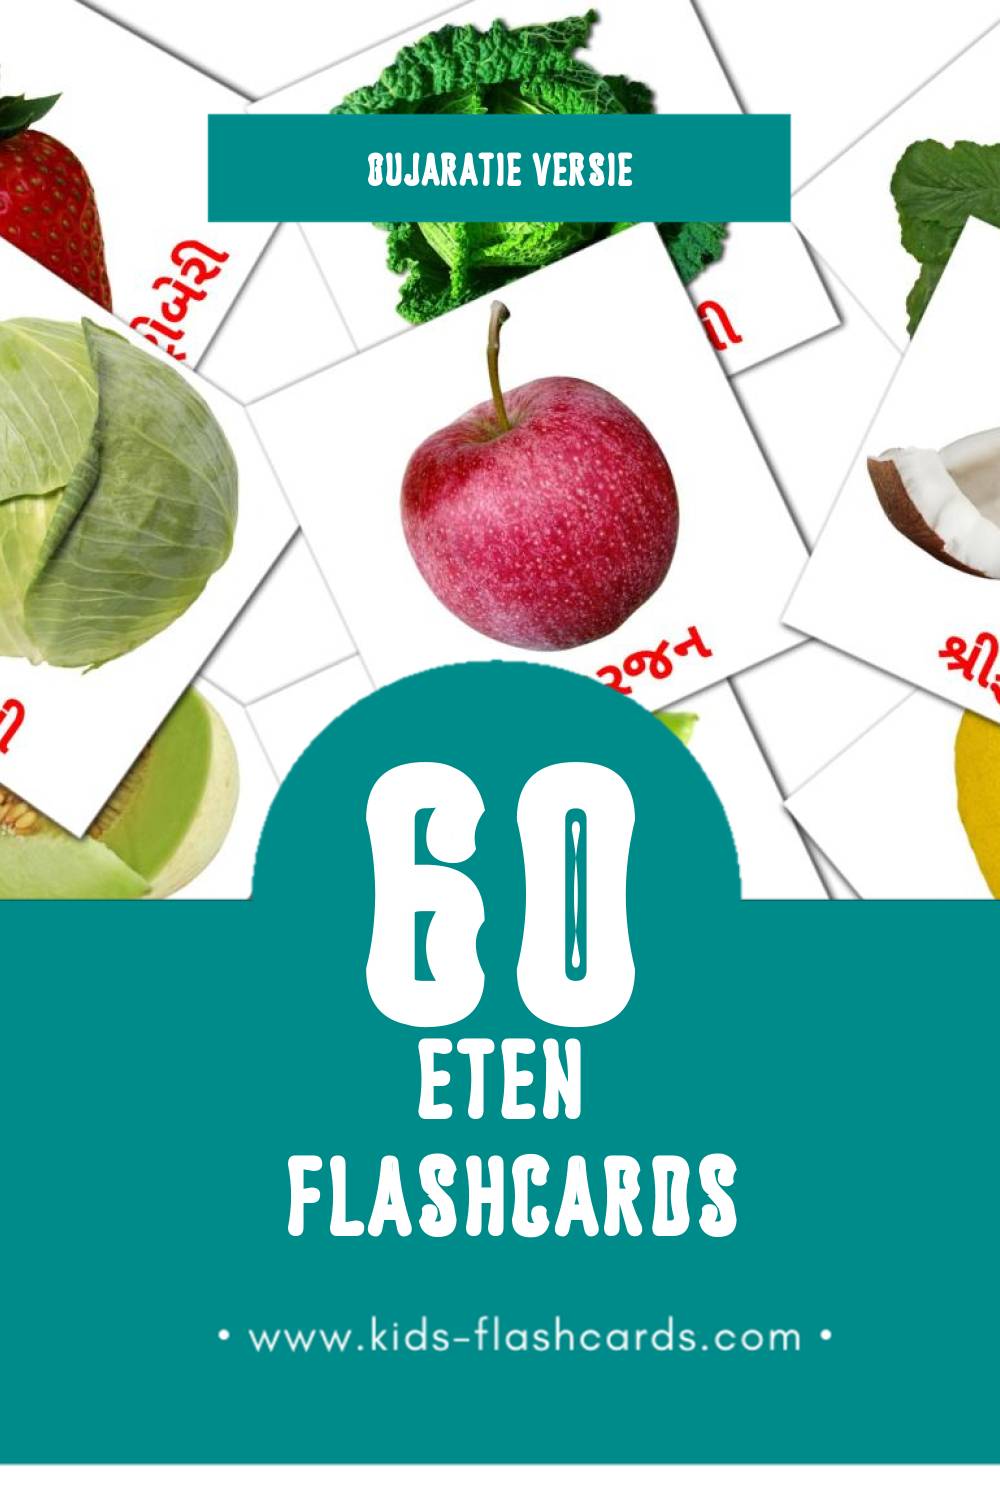 Visuele ખોરાક Flashcards voor Kleuters (60 kaarten in het Gujarati)